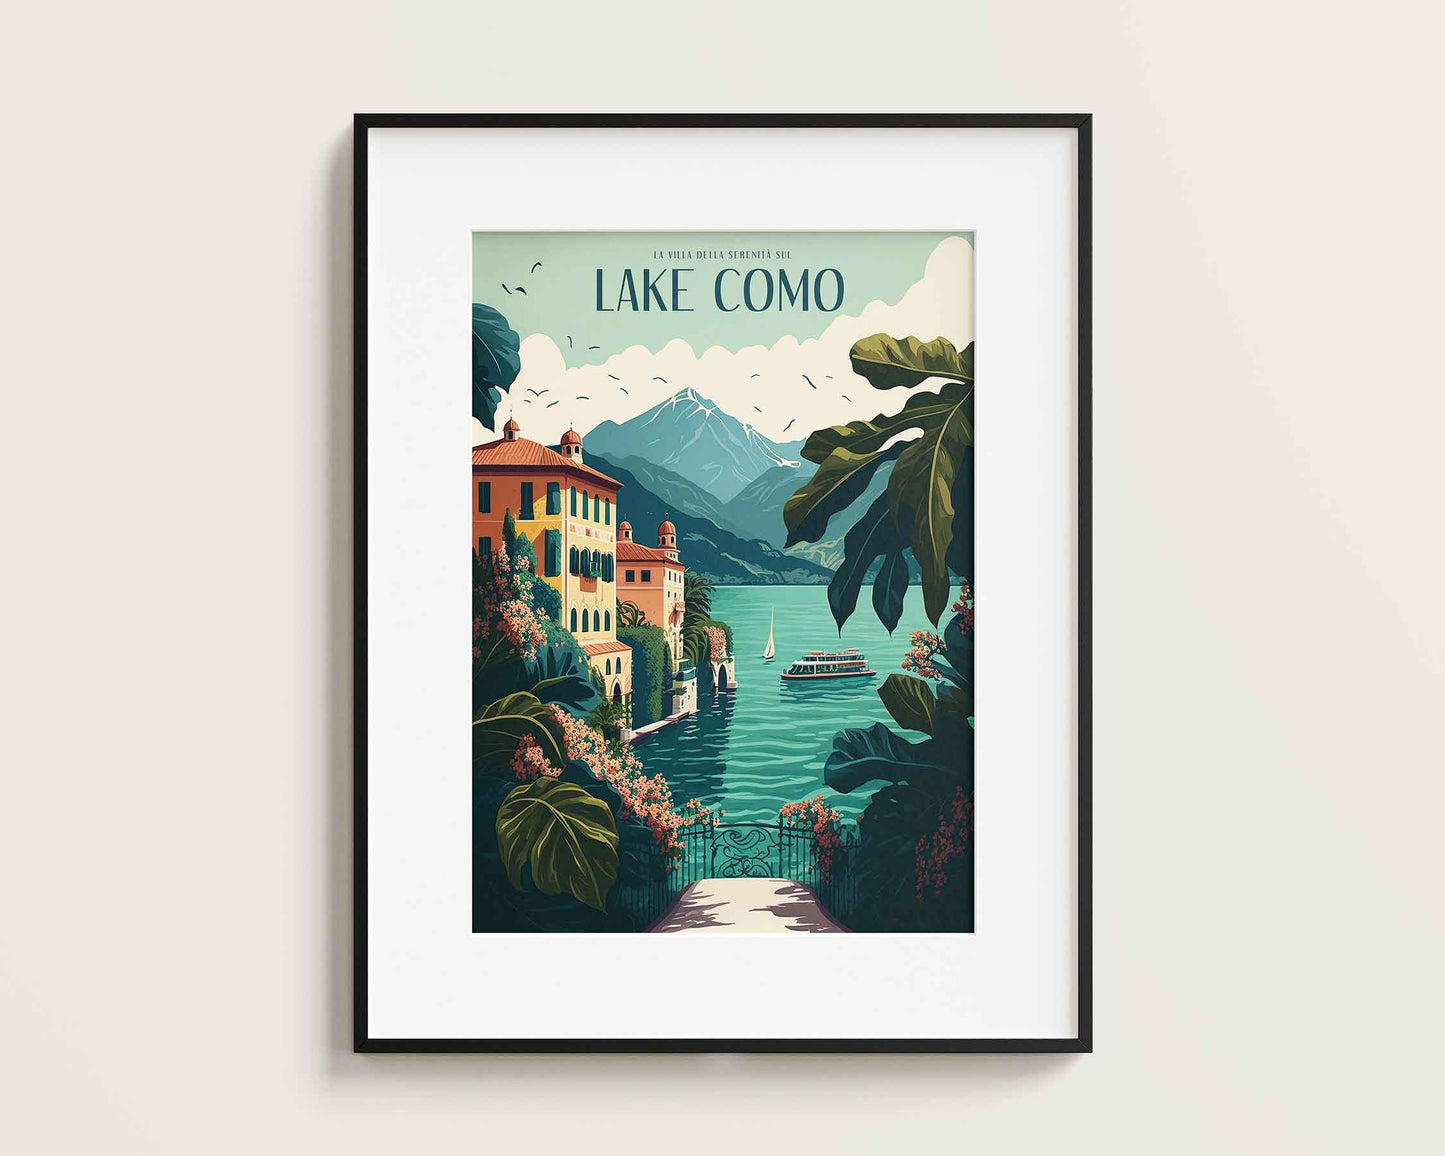 Framed Image of Retro Lake Como Italy Travel Illustration Wall Art Poster Print